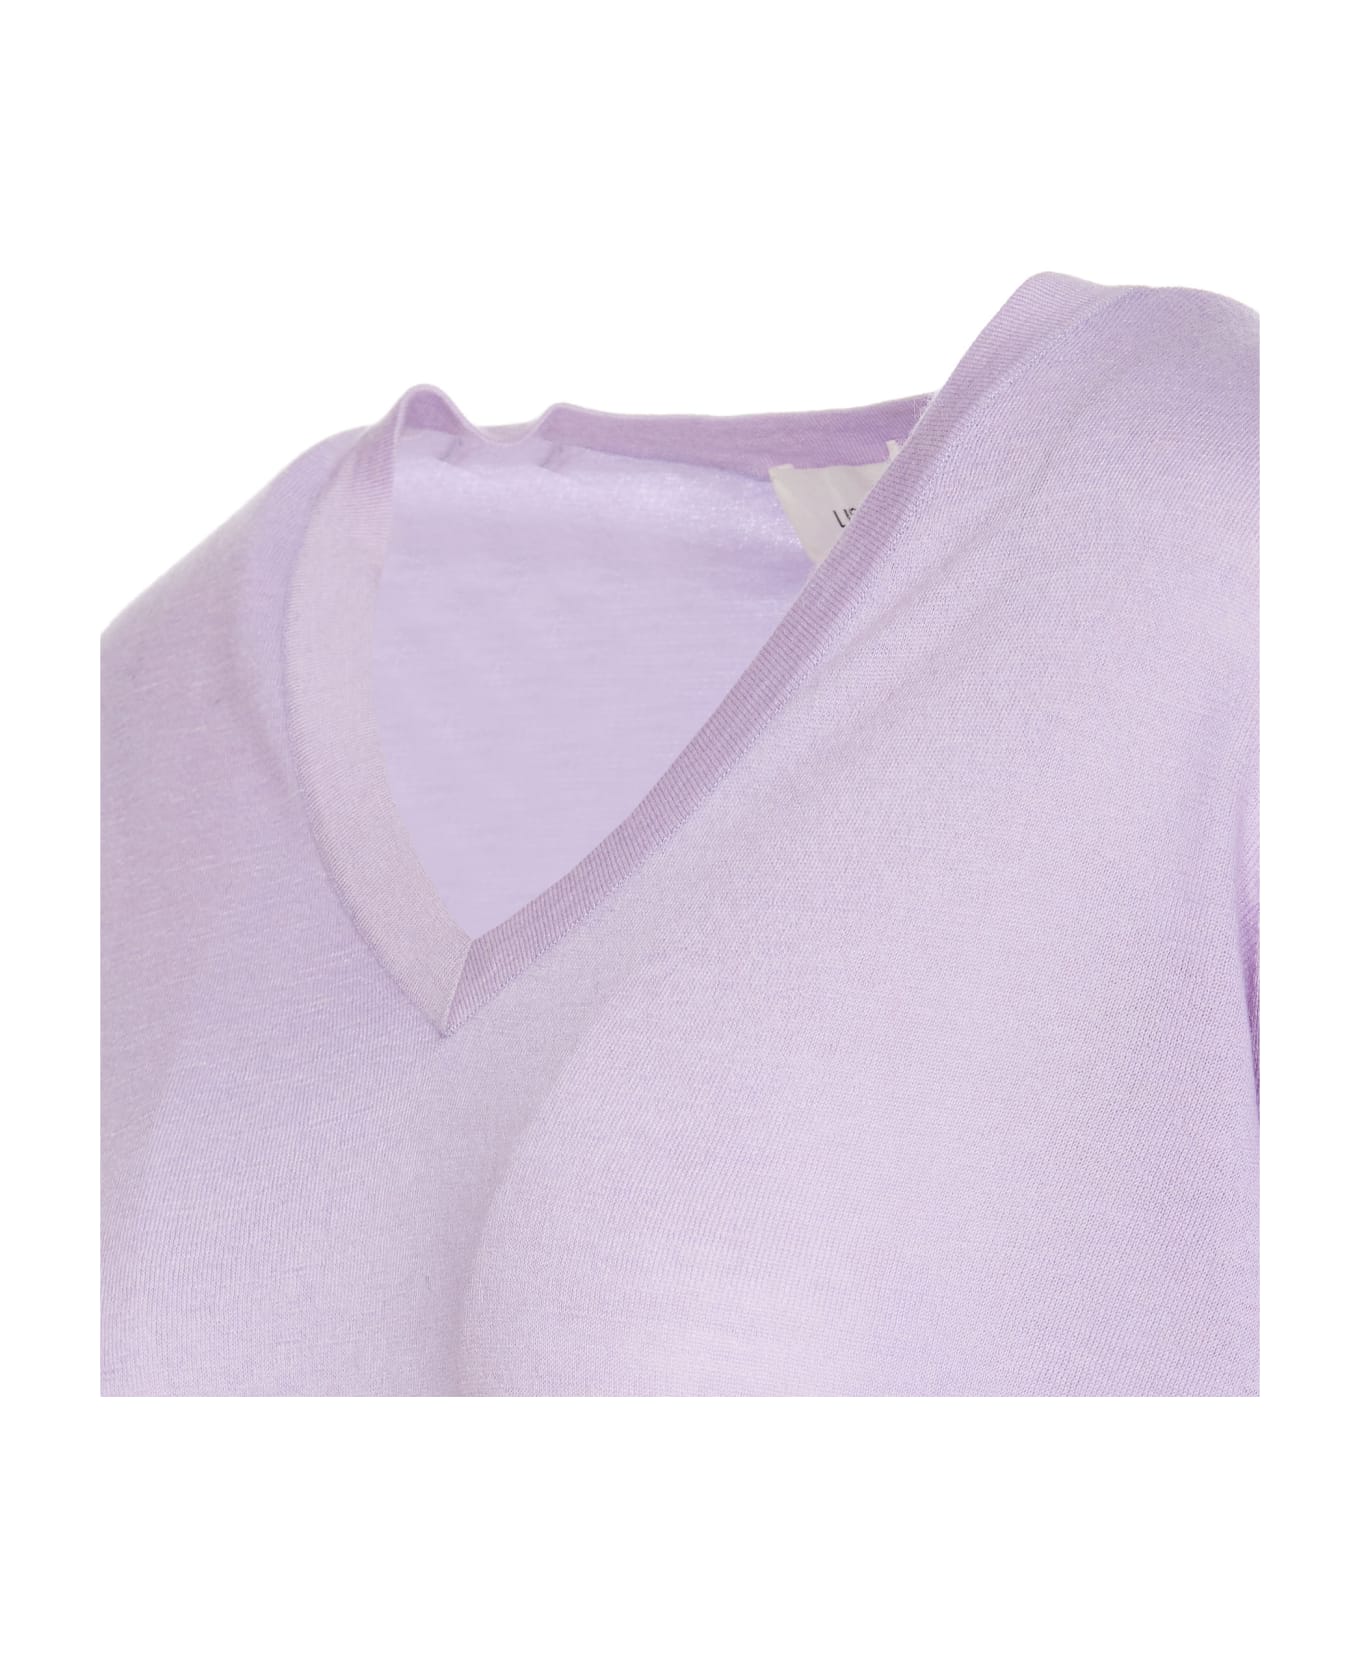 Lisa Yang Jane Sweater - Purple ニットウェア